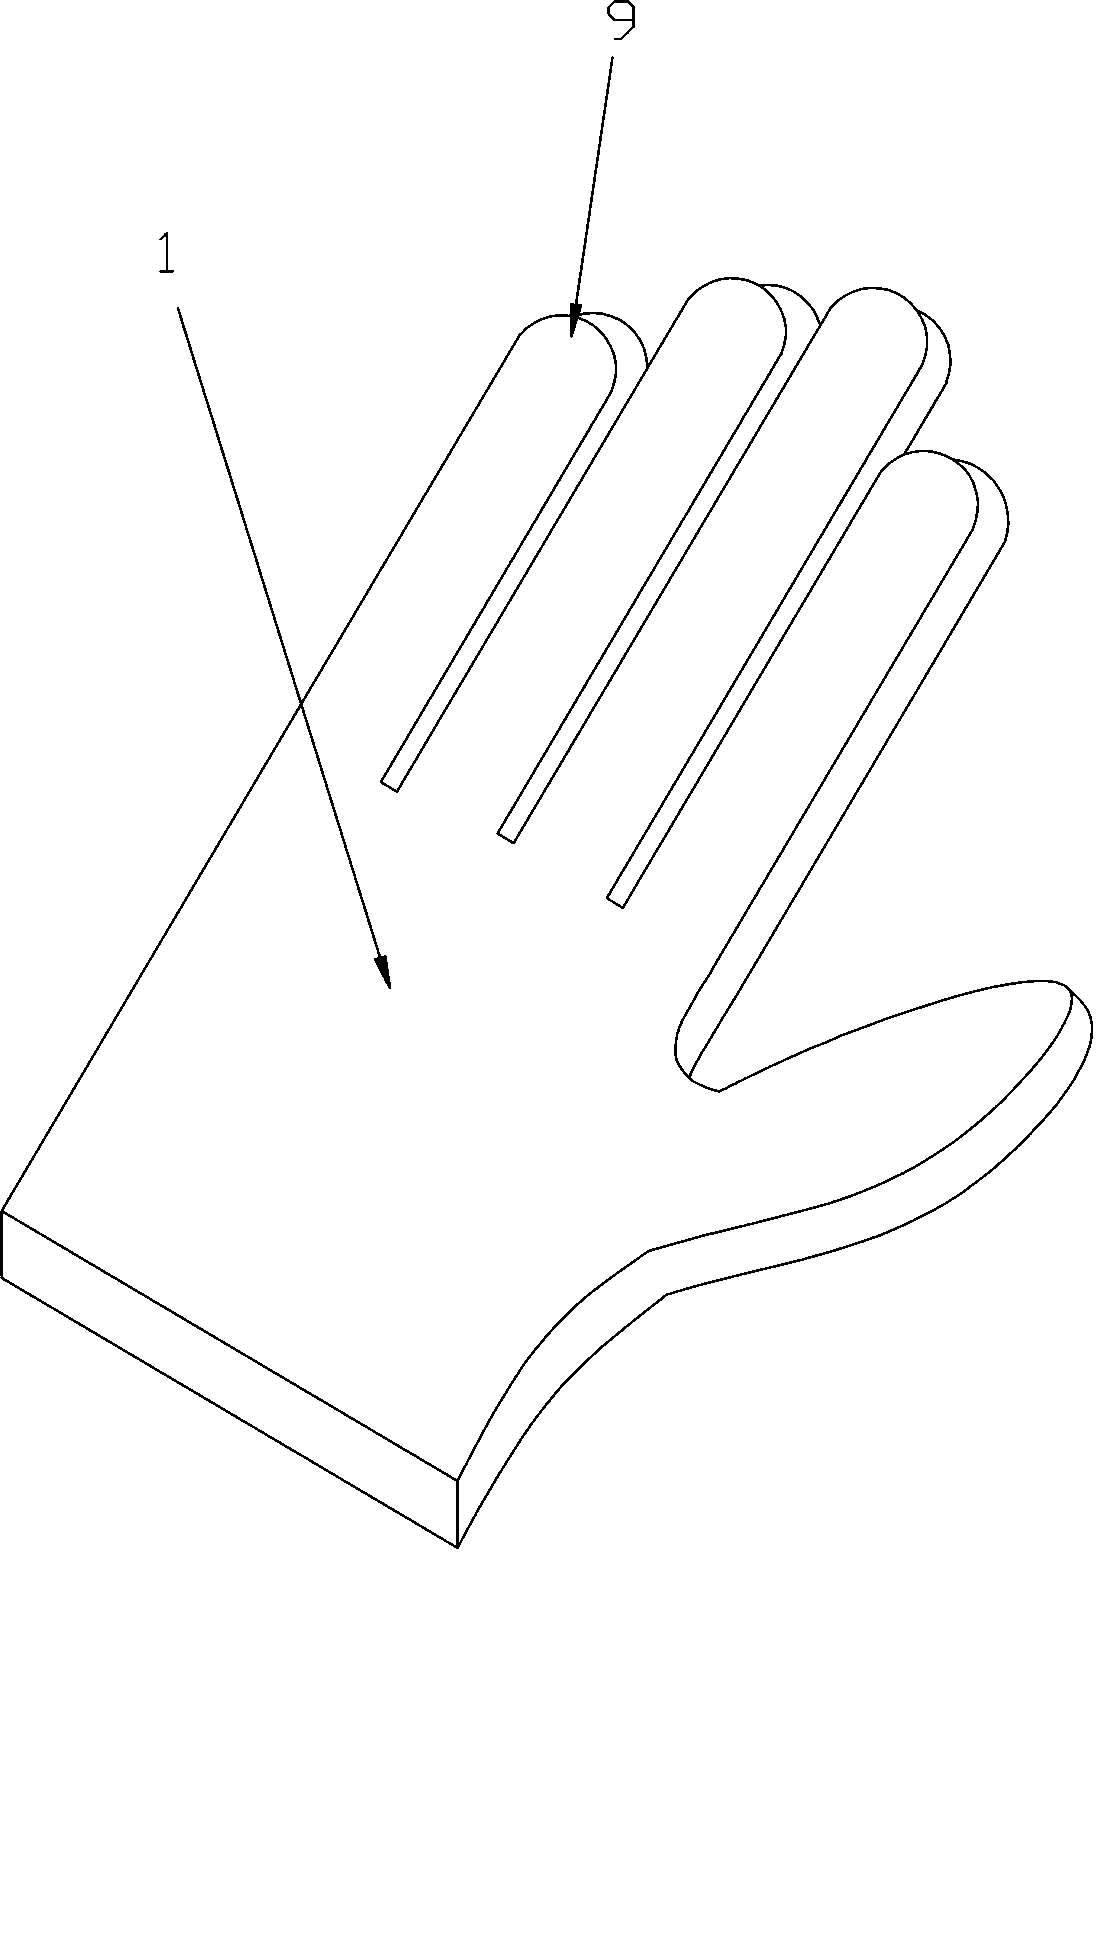 Ventilative rubber gloves